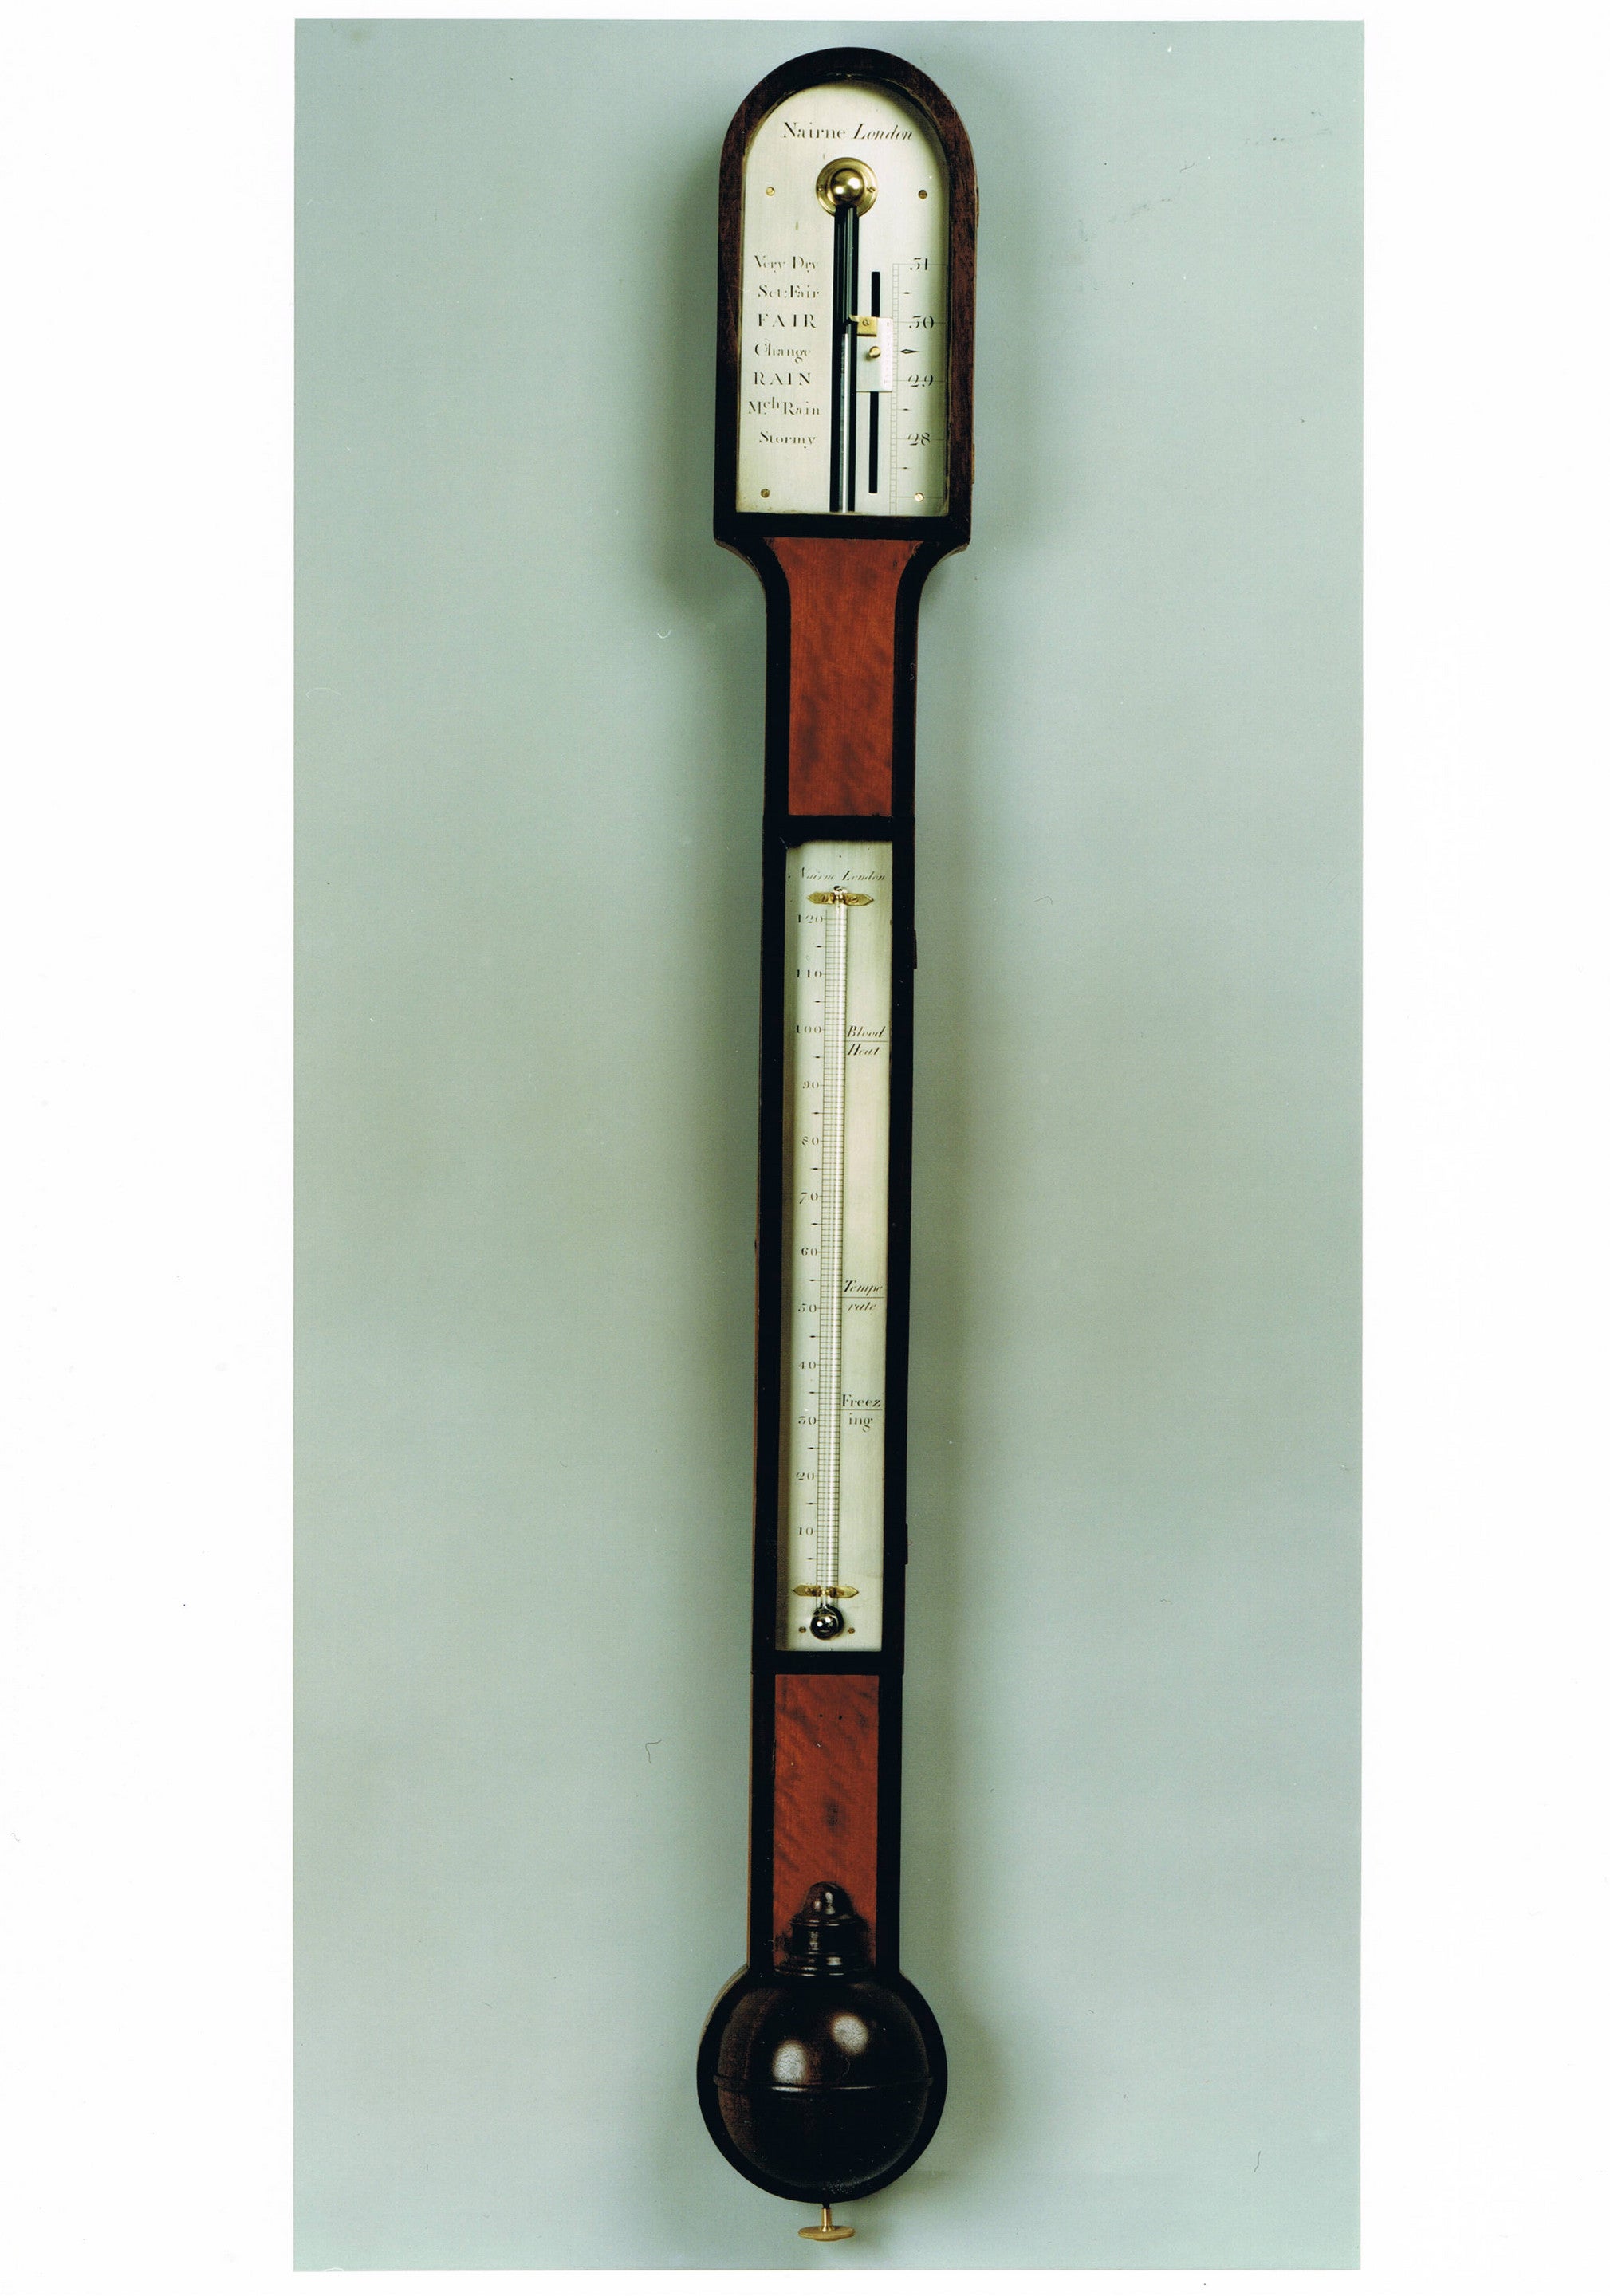 Antique Barometer by Edward Nairne, London